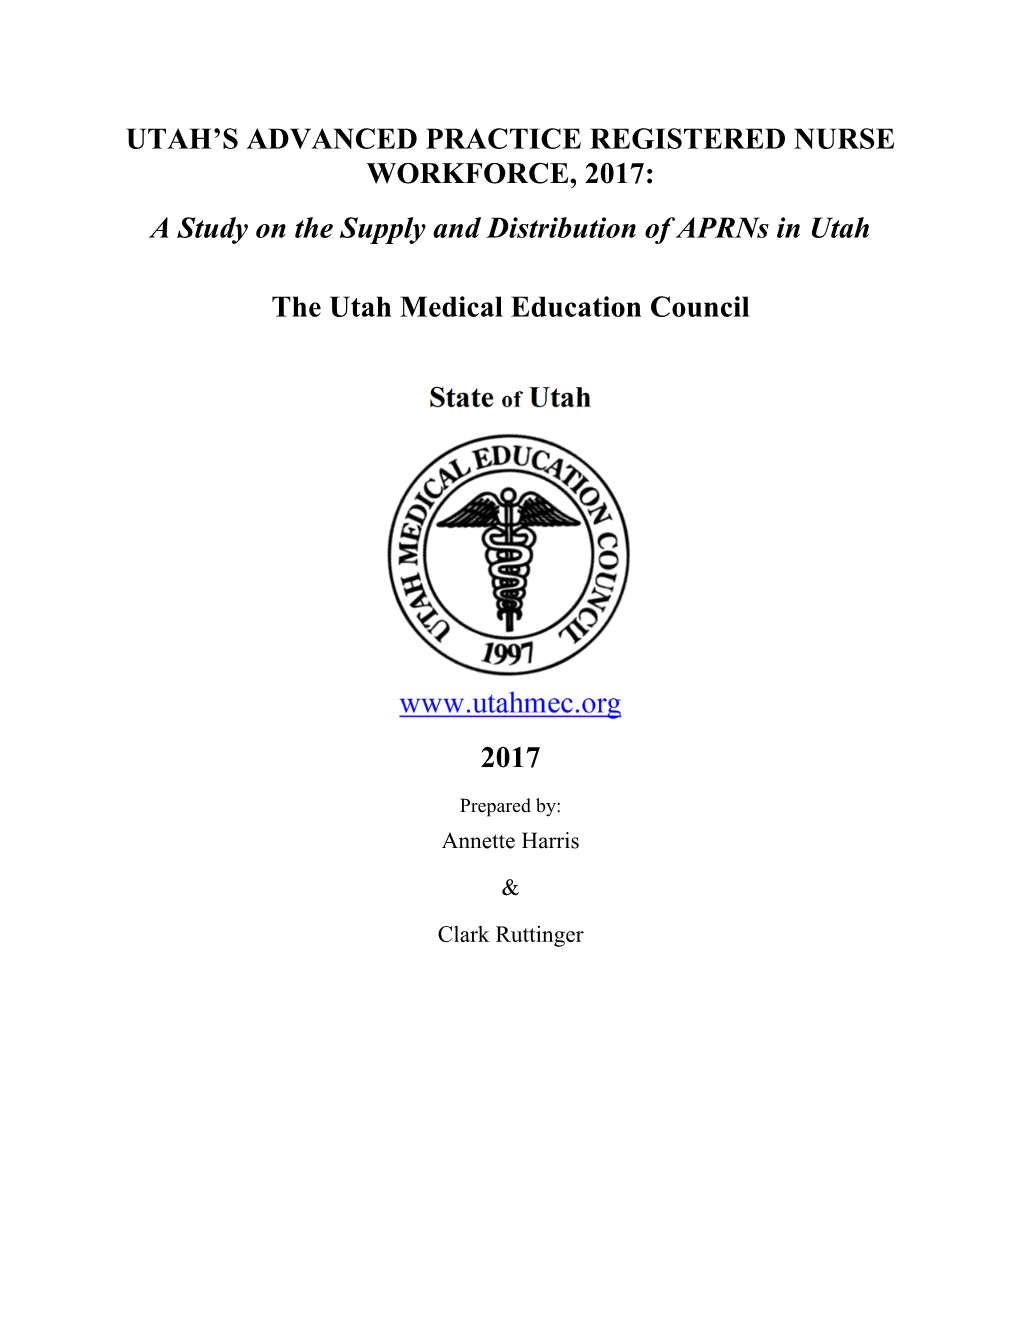 UTAH's ADVANCED PRACTICE REGISTERED NURSE WORKFORCE, 2017: a Study on the Supply and Distribution of Aprns in Utah the Utah Me